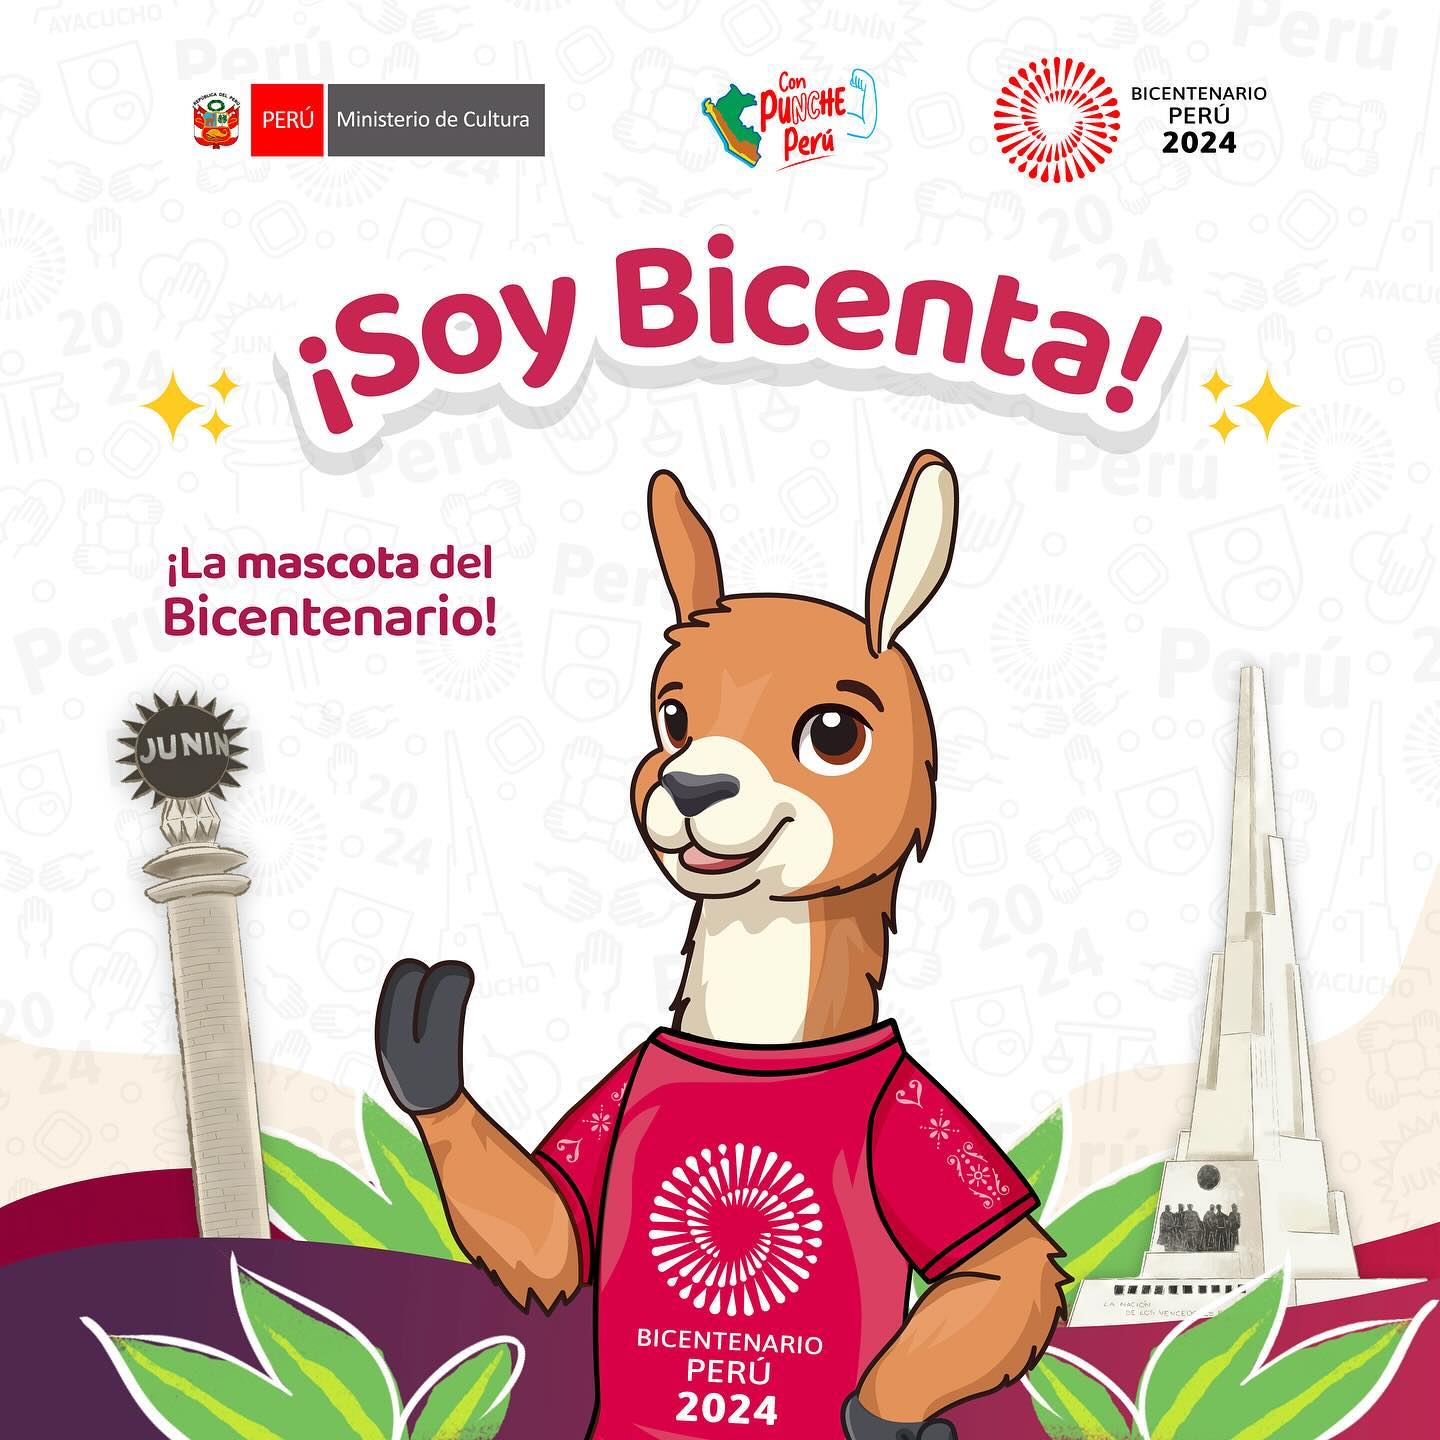 Presenta a Bicenta, la mascota oficial del Bicentenario